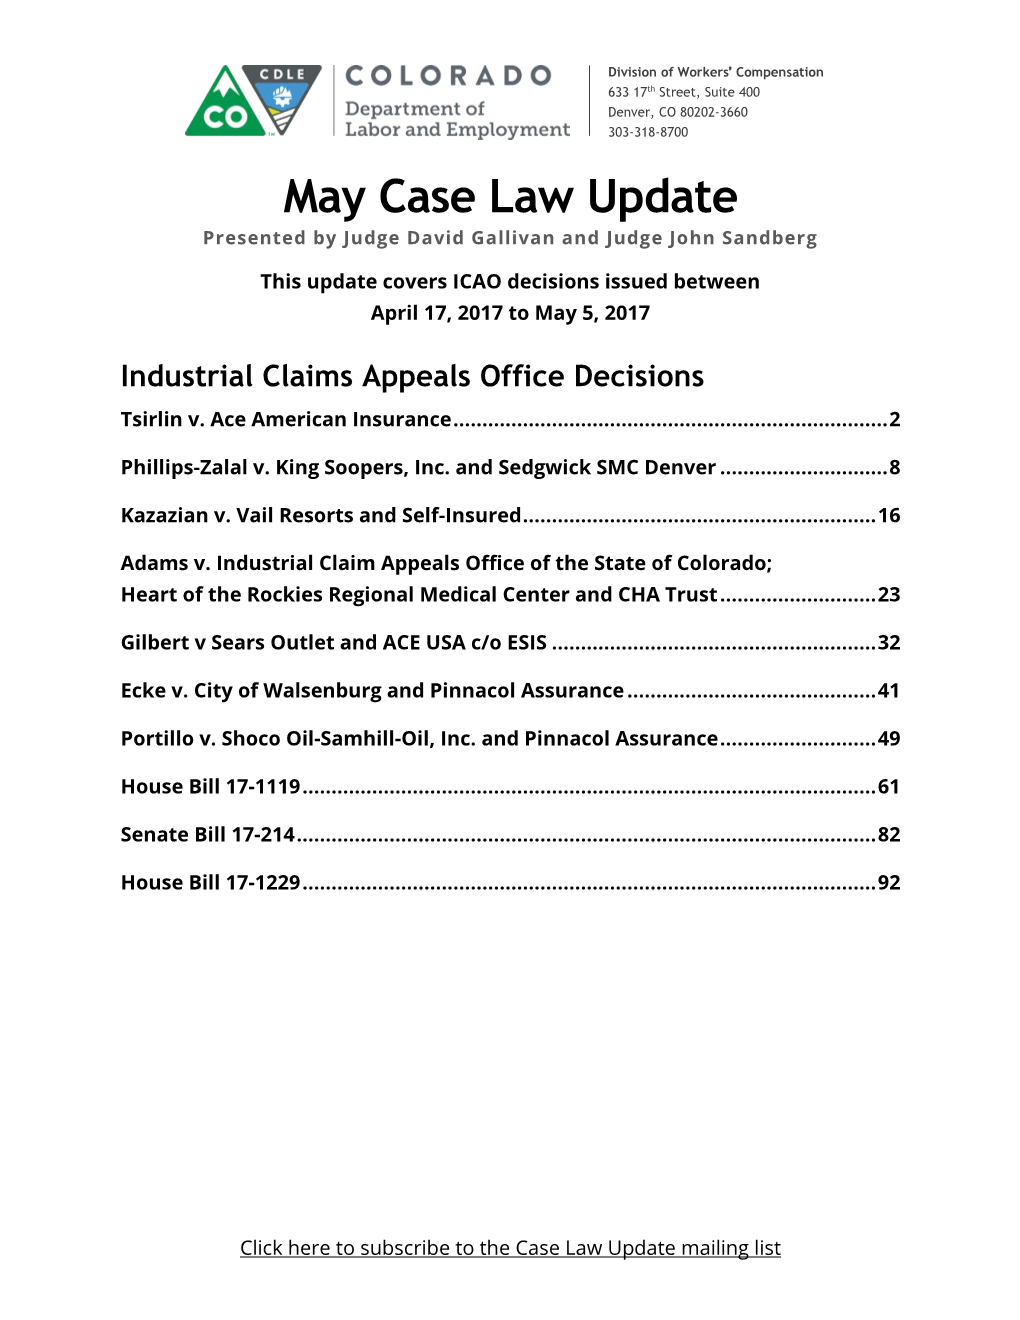 May Case Law Update Presented by Judge David Gallivan and Judge John Sandberg